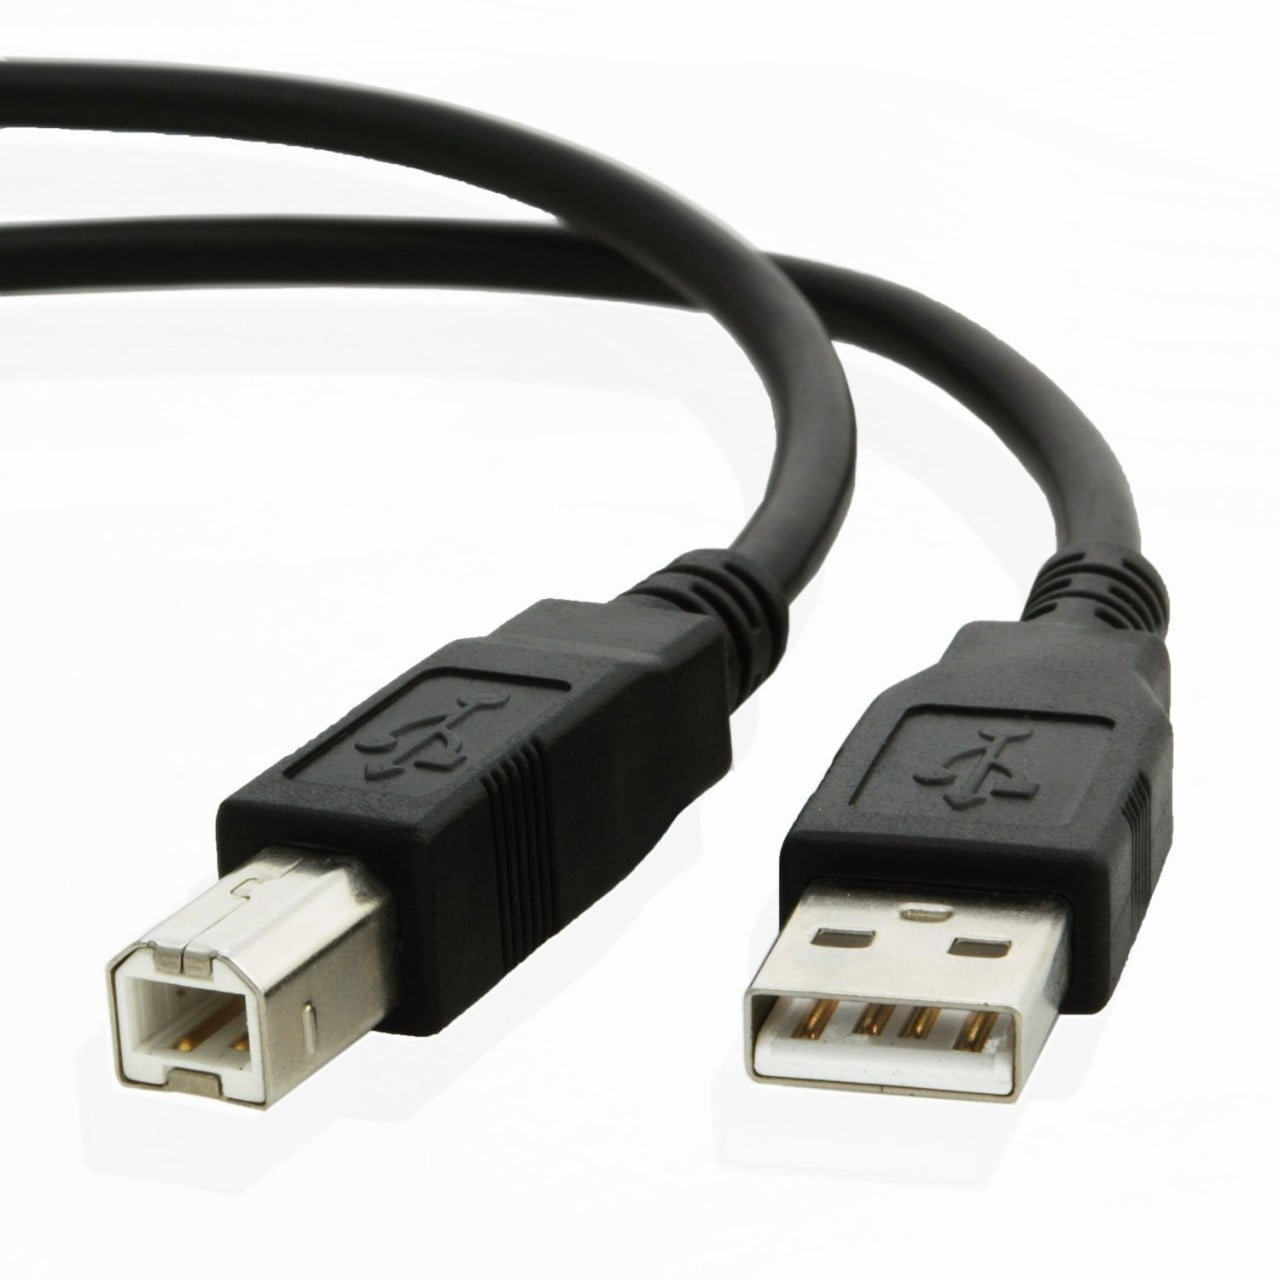 DDJ-SP1 DJ Controller Mixer USB Cord Cable for Pioneer DDJ-SR DDJ-SB 